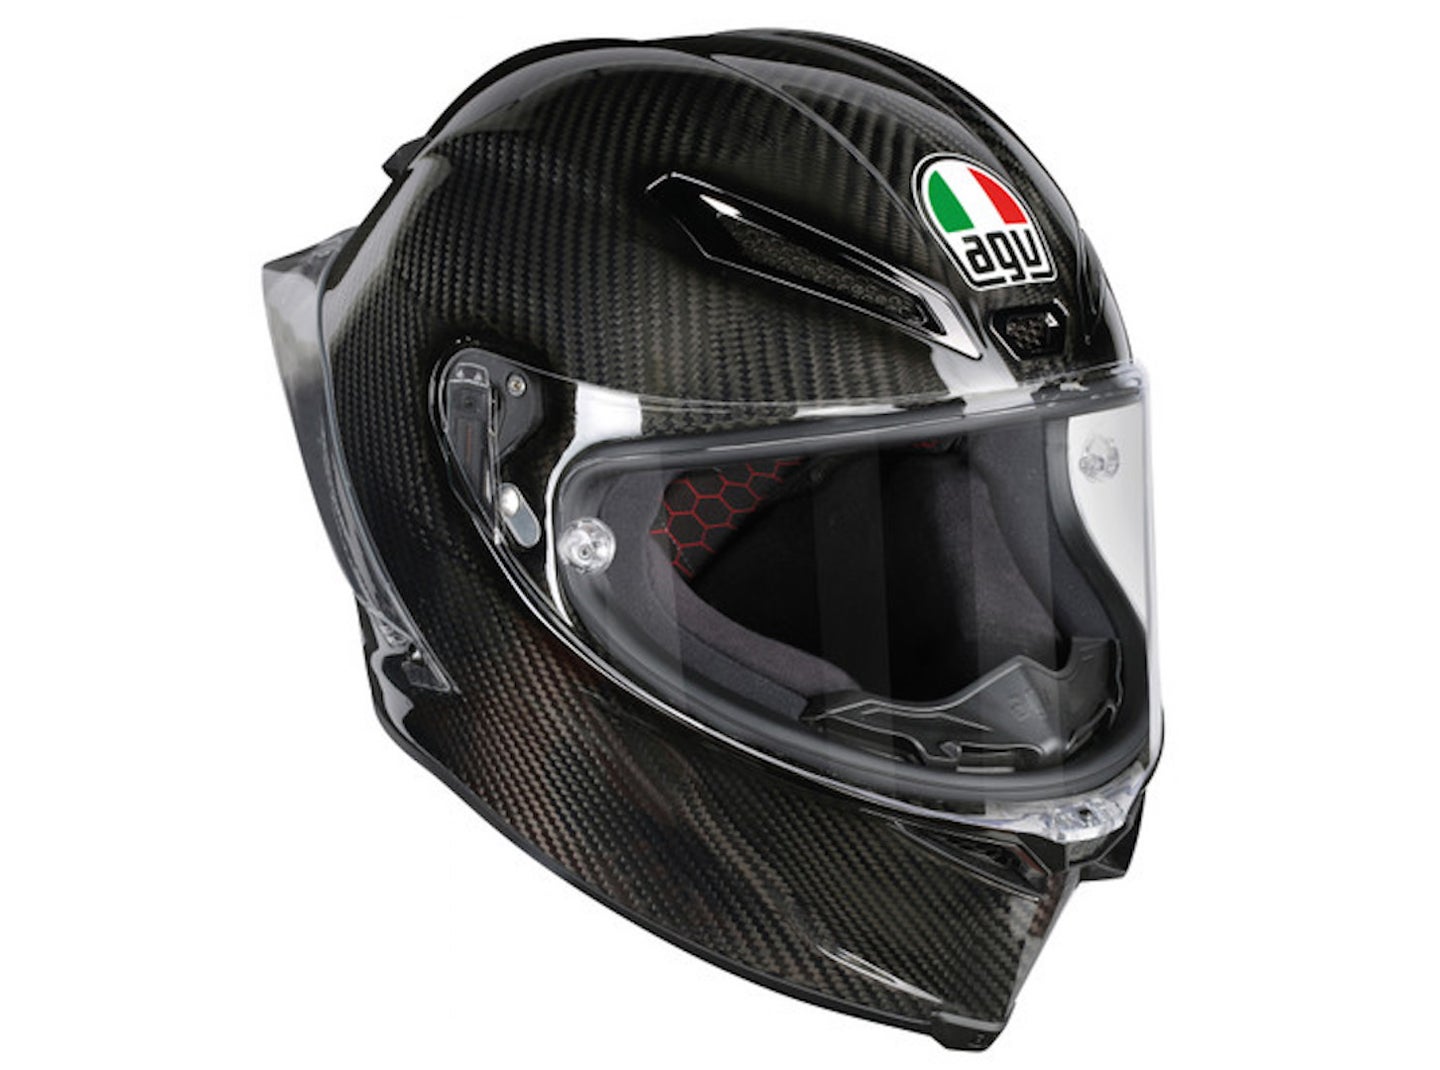 Gear Review: The AGV Pista GP R Helmet